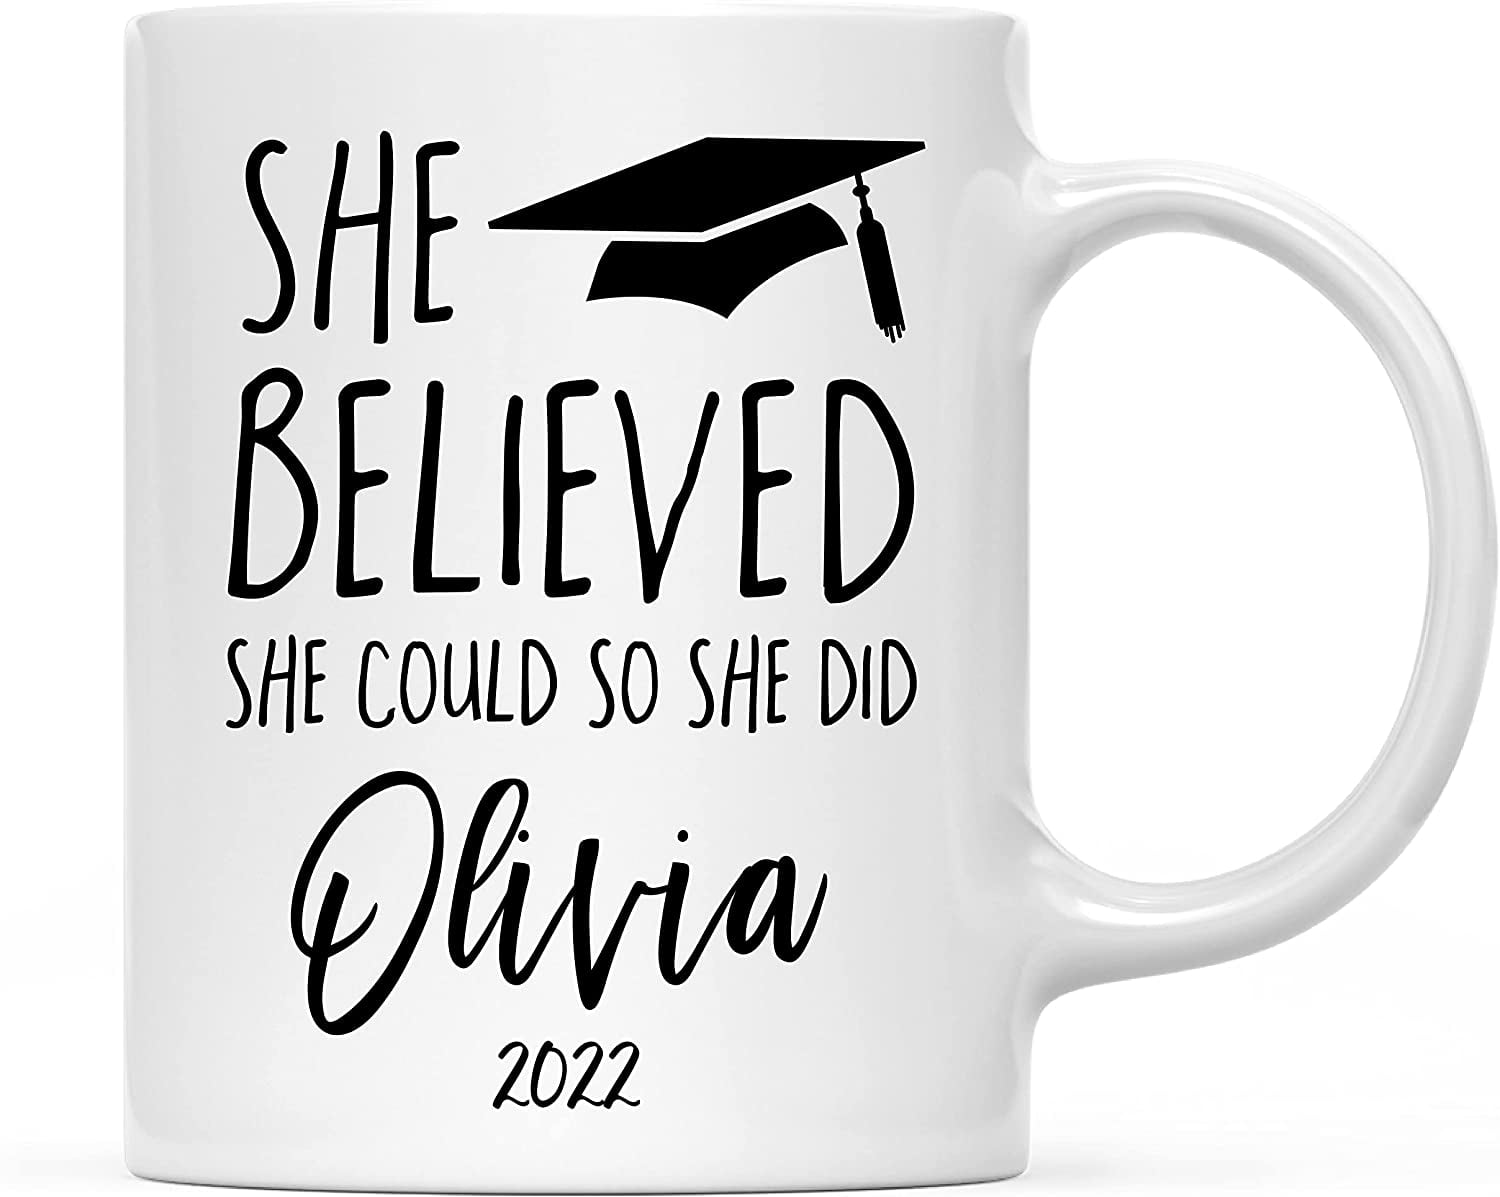  Personalized Graduation Mug 2022, Even a Global